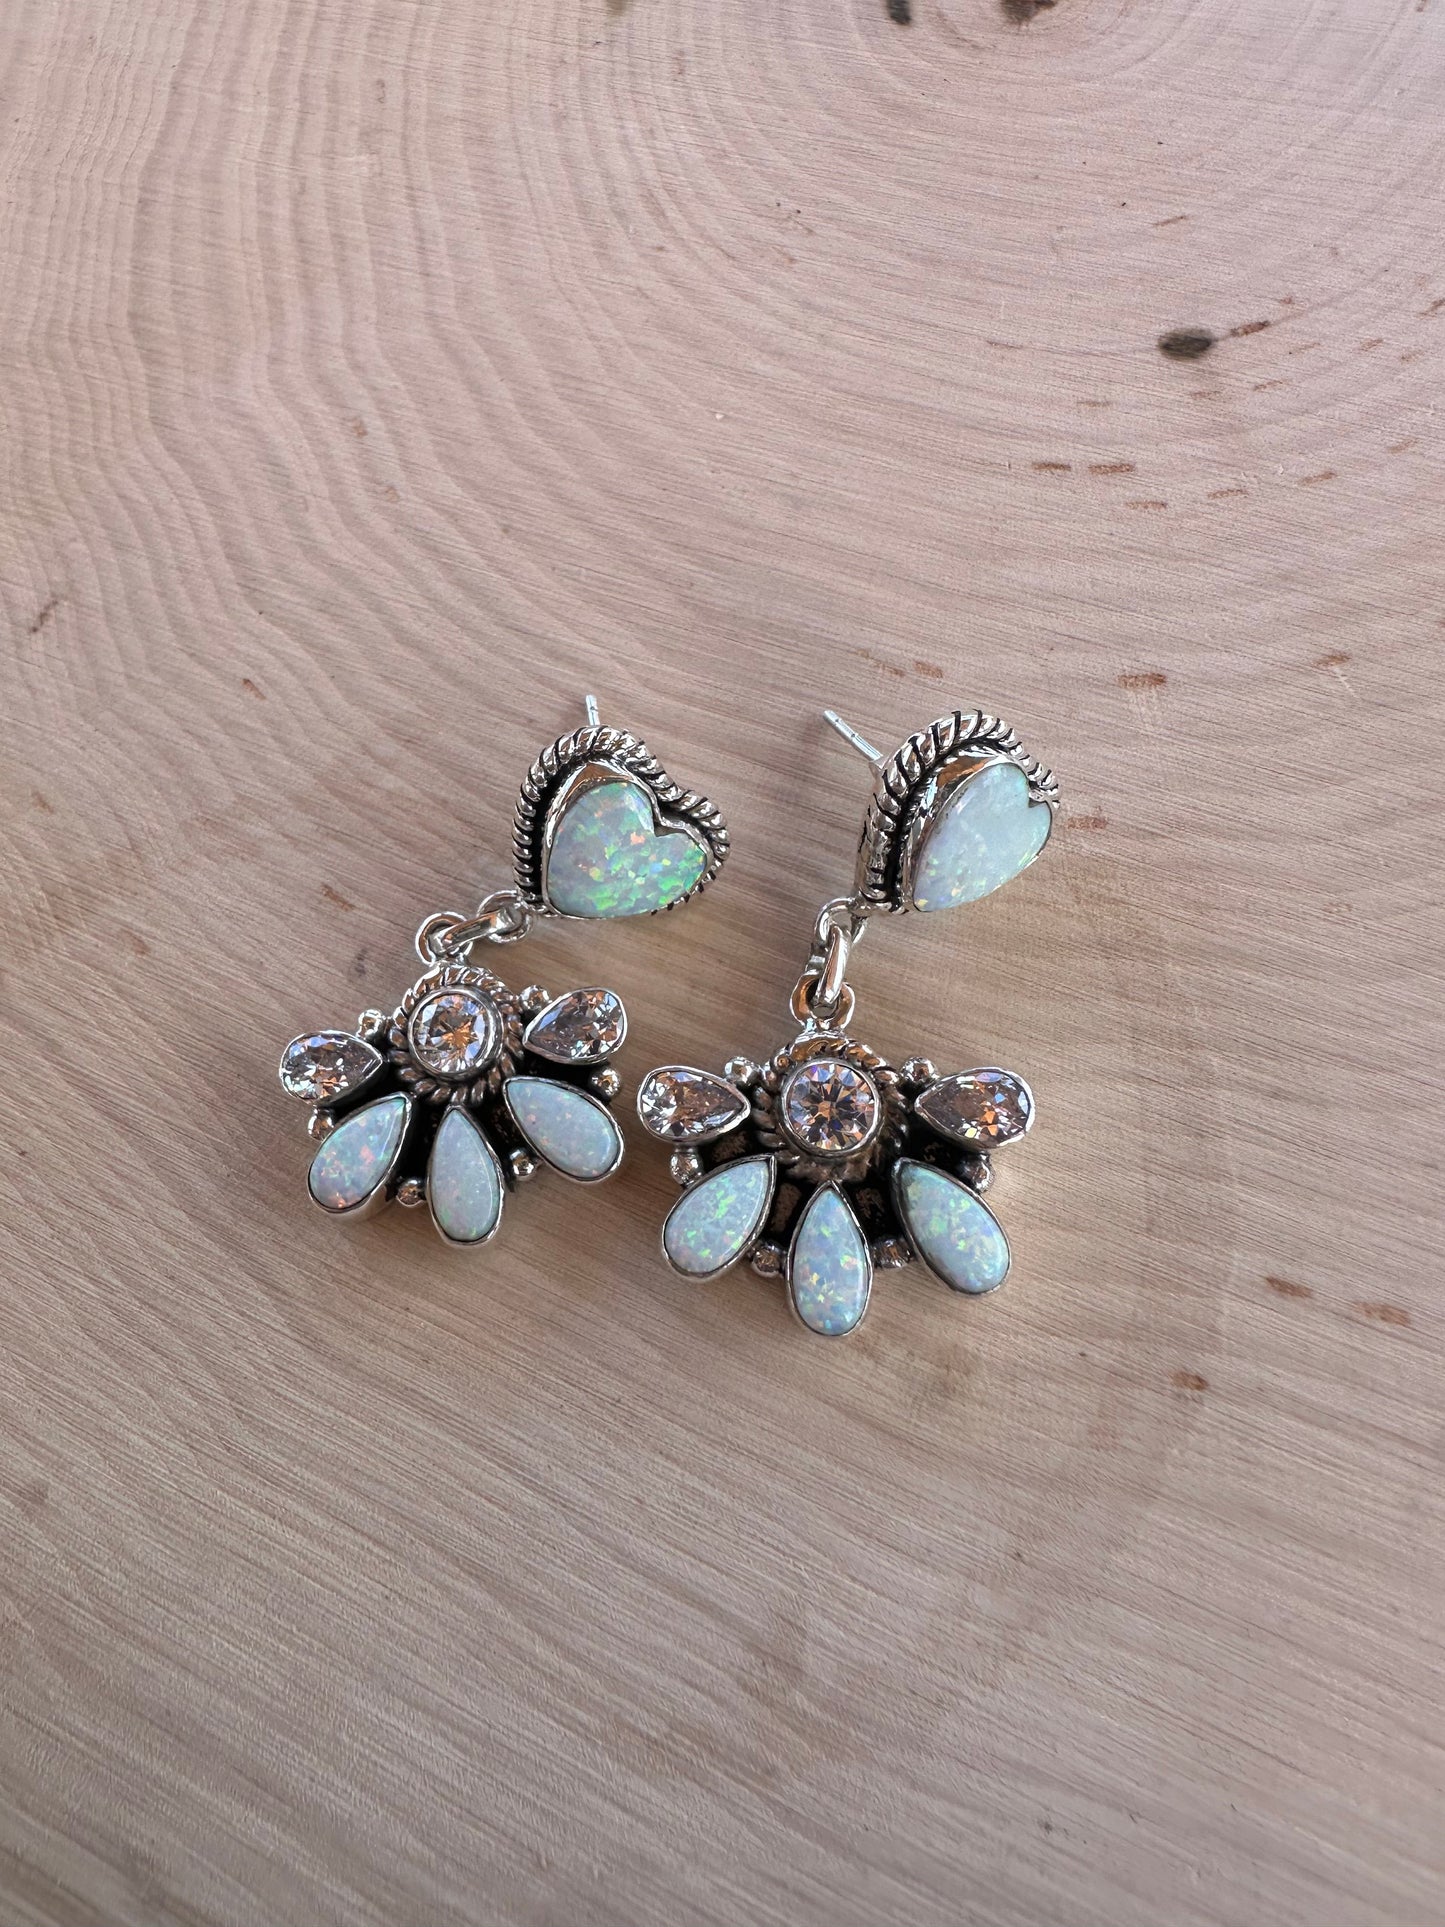 Handmade Fire Opal, CZ and Sterling Silver Dangle Earrings